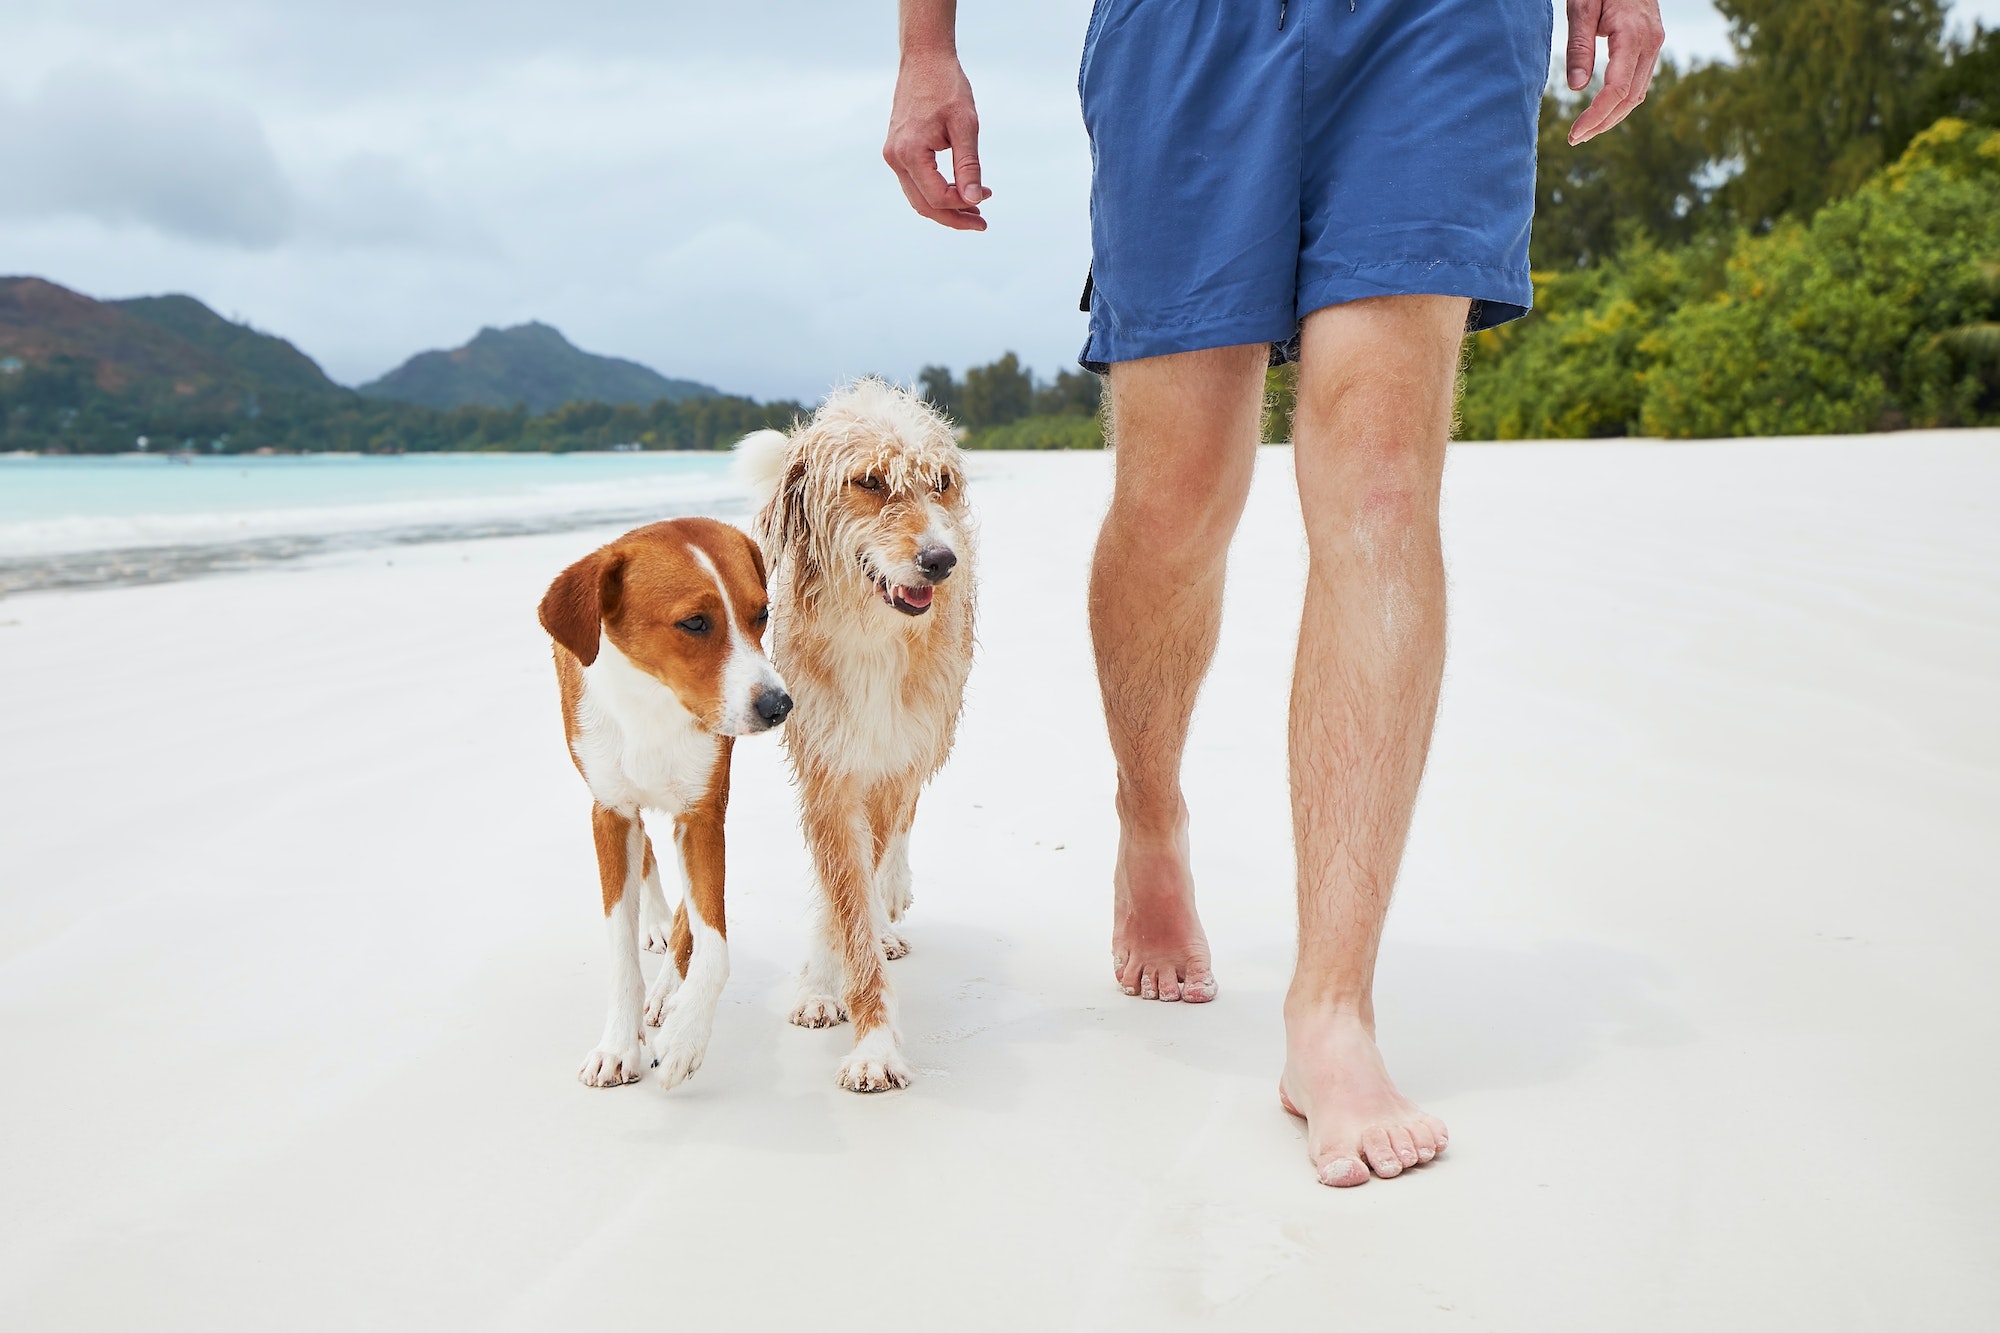 Man walking with dog on beach